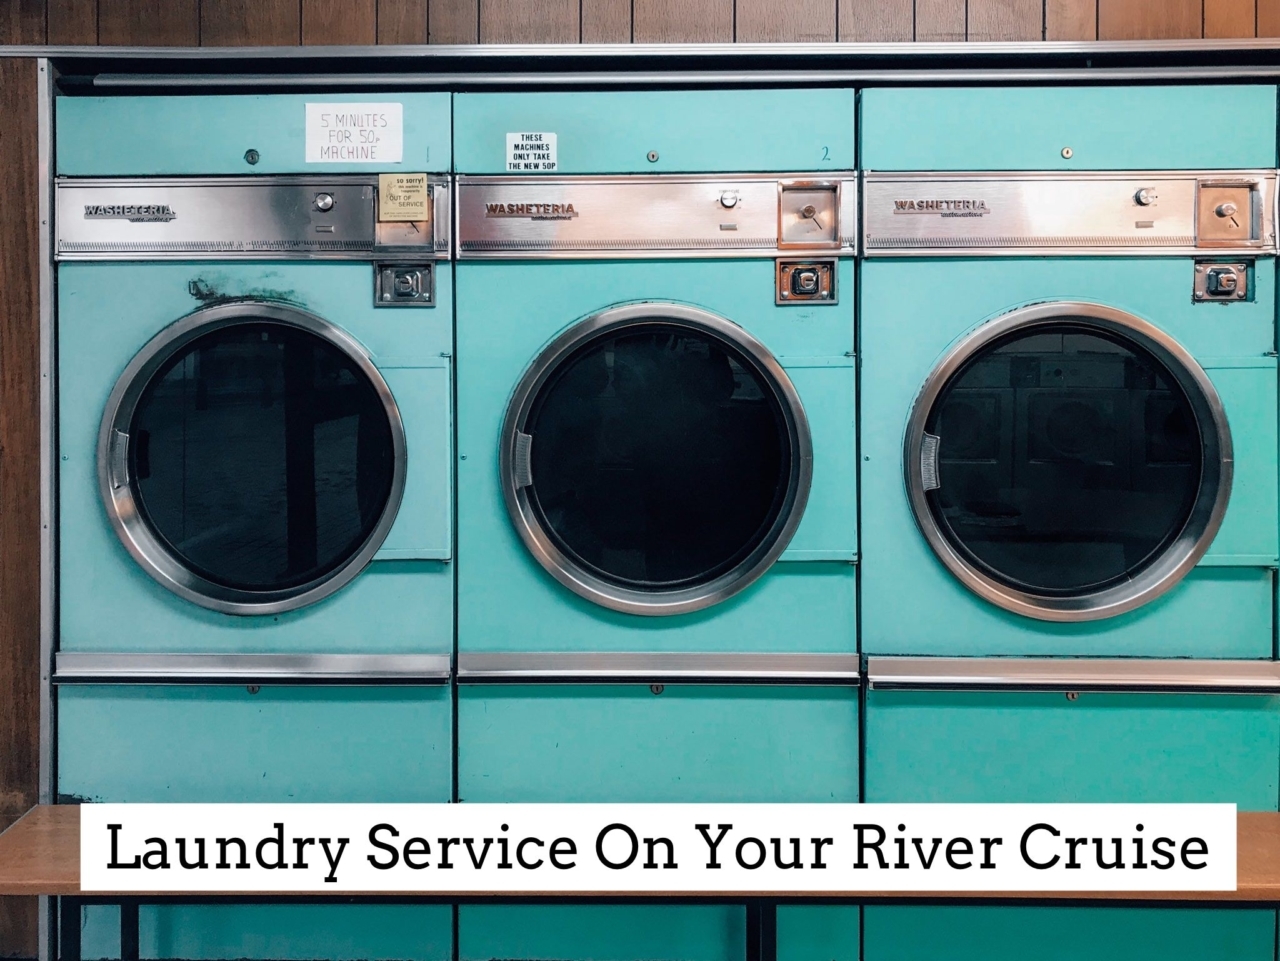 viking river cruise laundry service